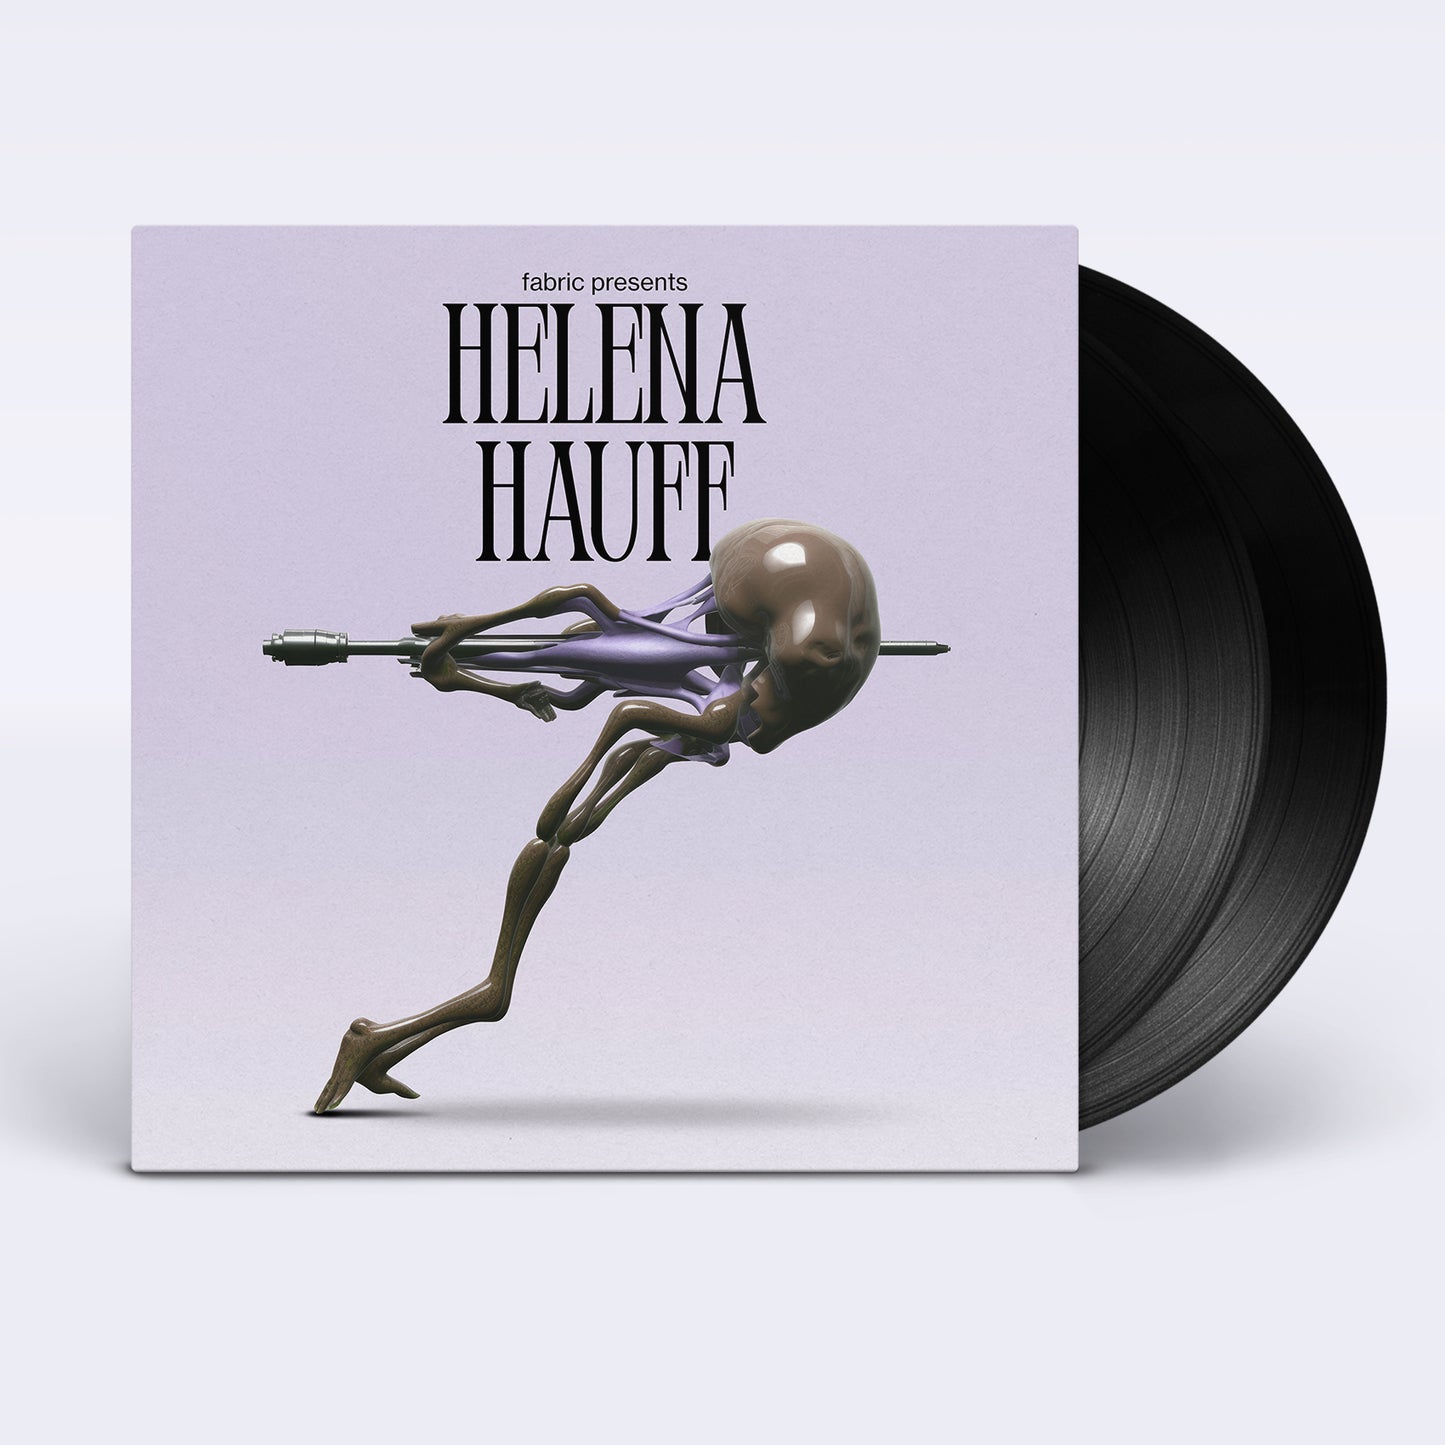 fabric presents Helena Hauff